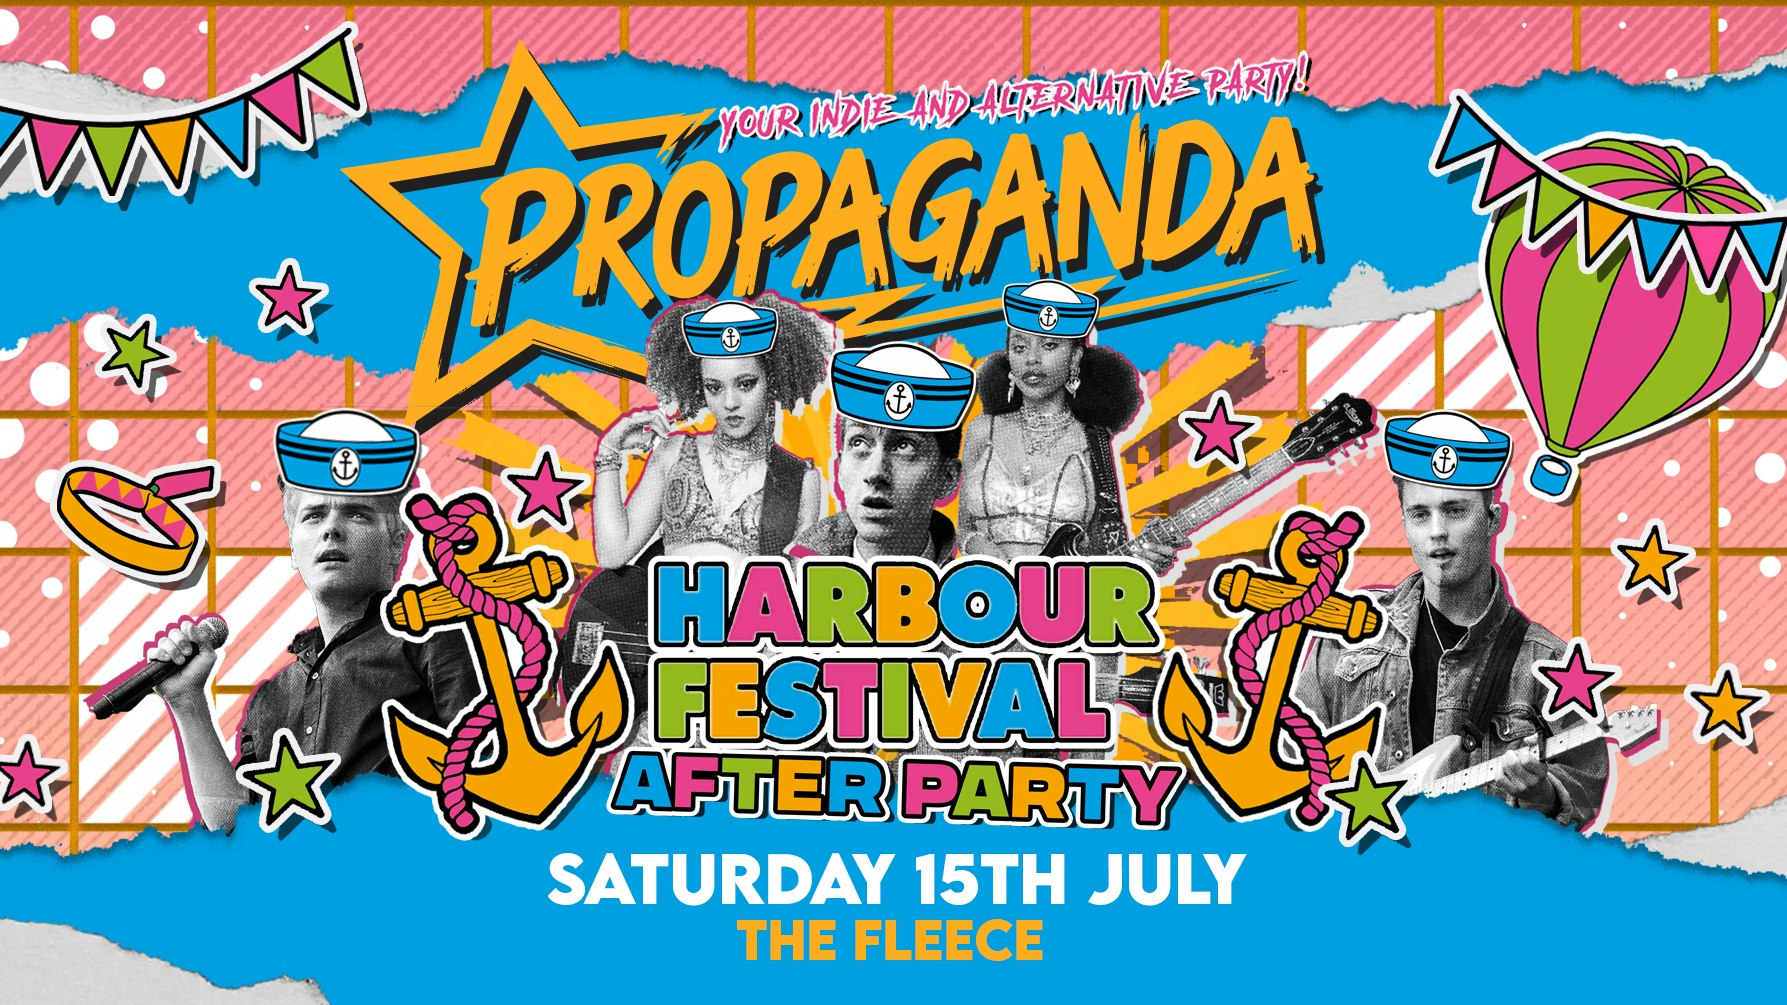 Propaganda Bristol – Harbour Festival After Party!